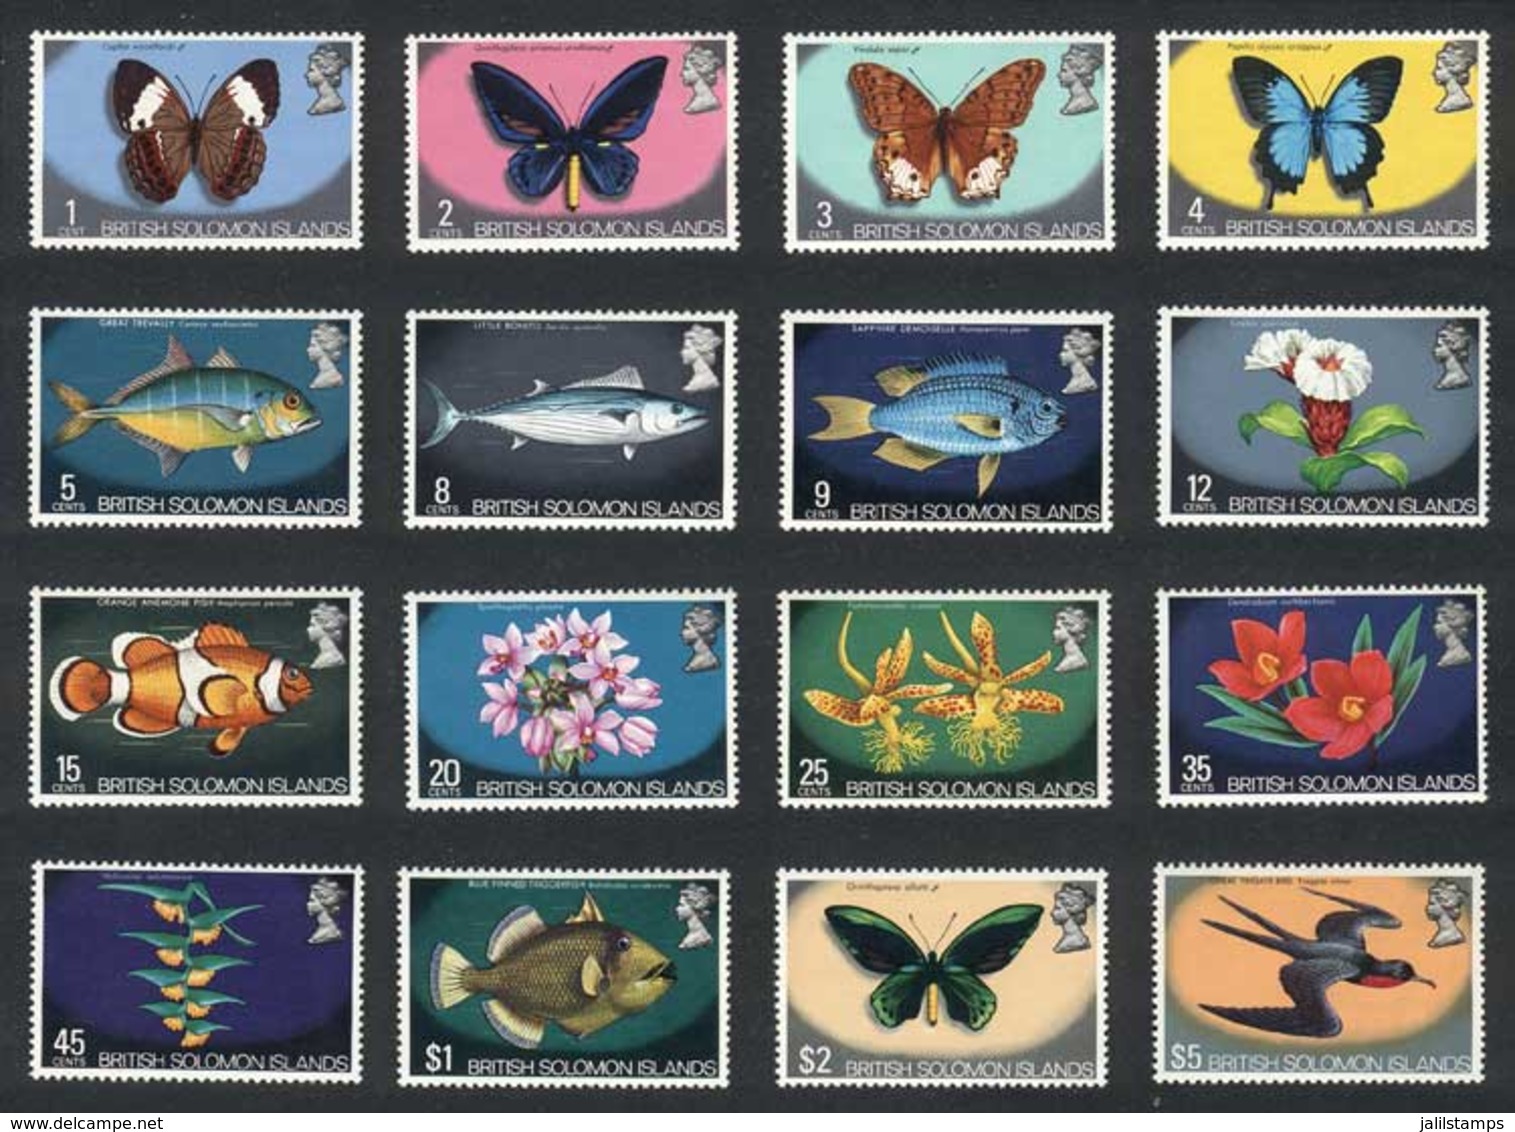 SOLOMON ISLANDS: Yvert 213/27 + 234, Animals, Birds, Fish And Flowers, Complete Set Of 16 Values, Excellent Quality! - Salomon (Iles 1978-...)